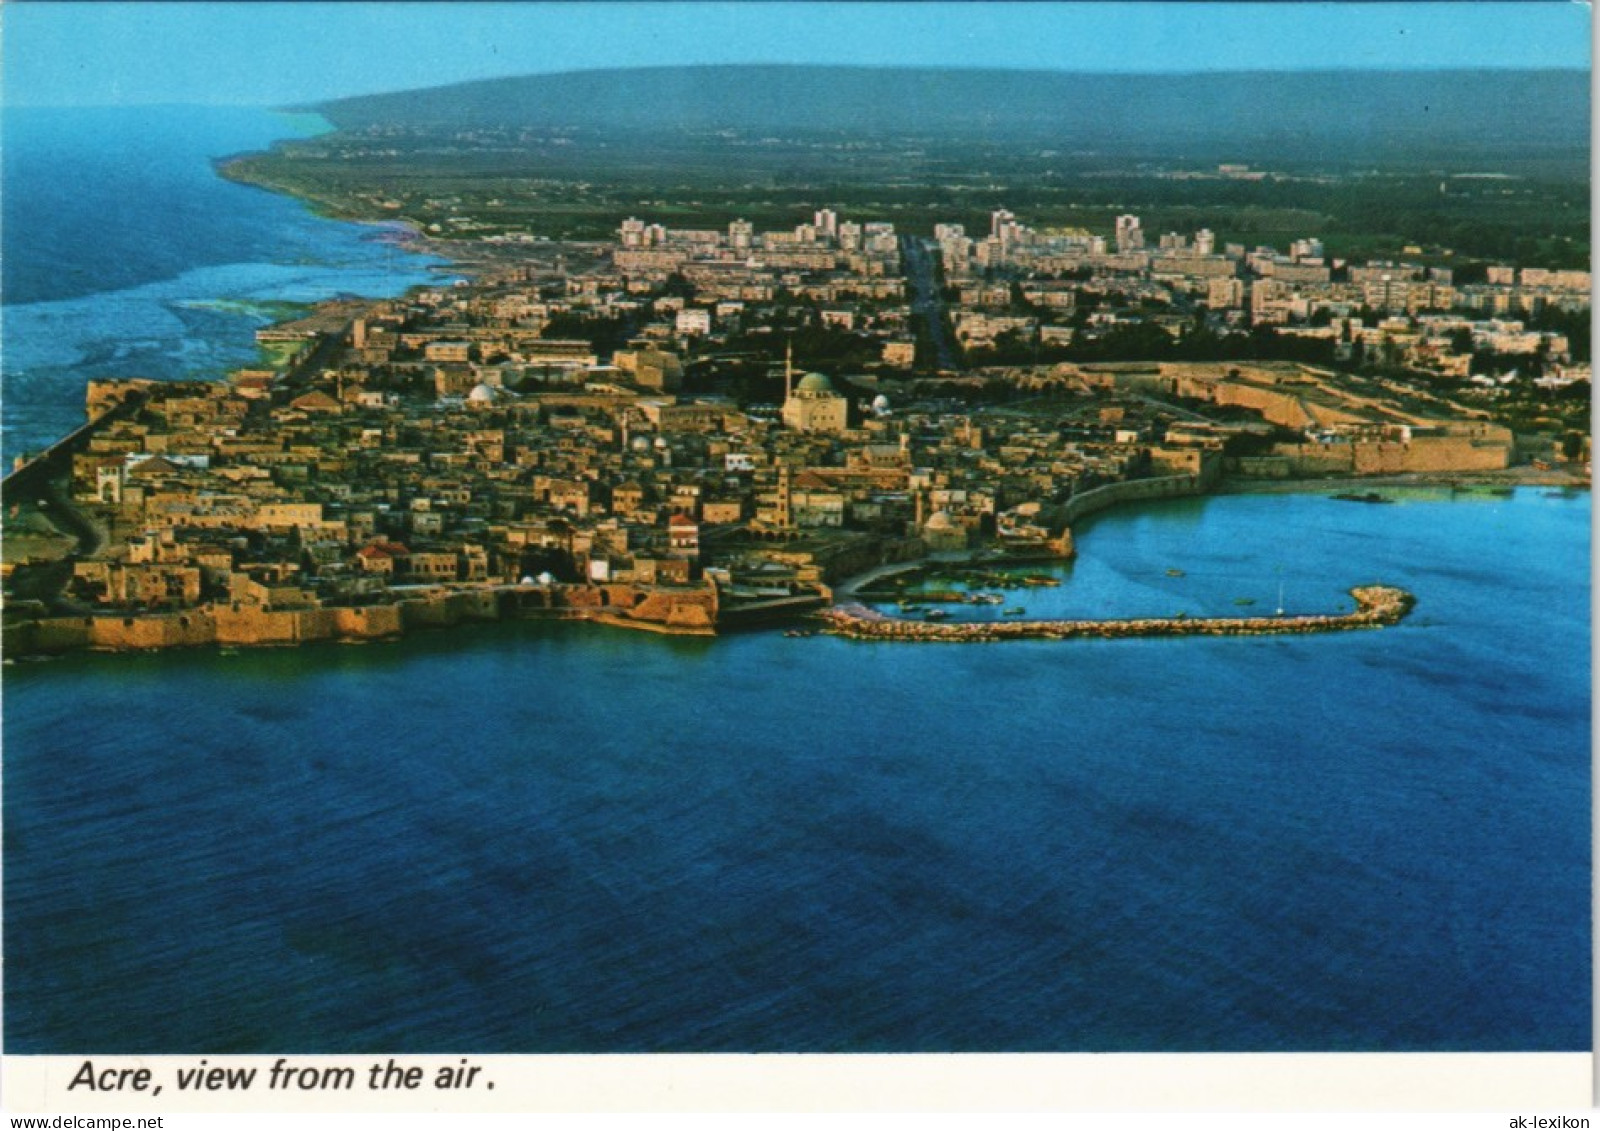 Akkon (Acre) עכו עכו, מבט ממעוף הצפור Luftbild (Aerial View) 1990 - Israel